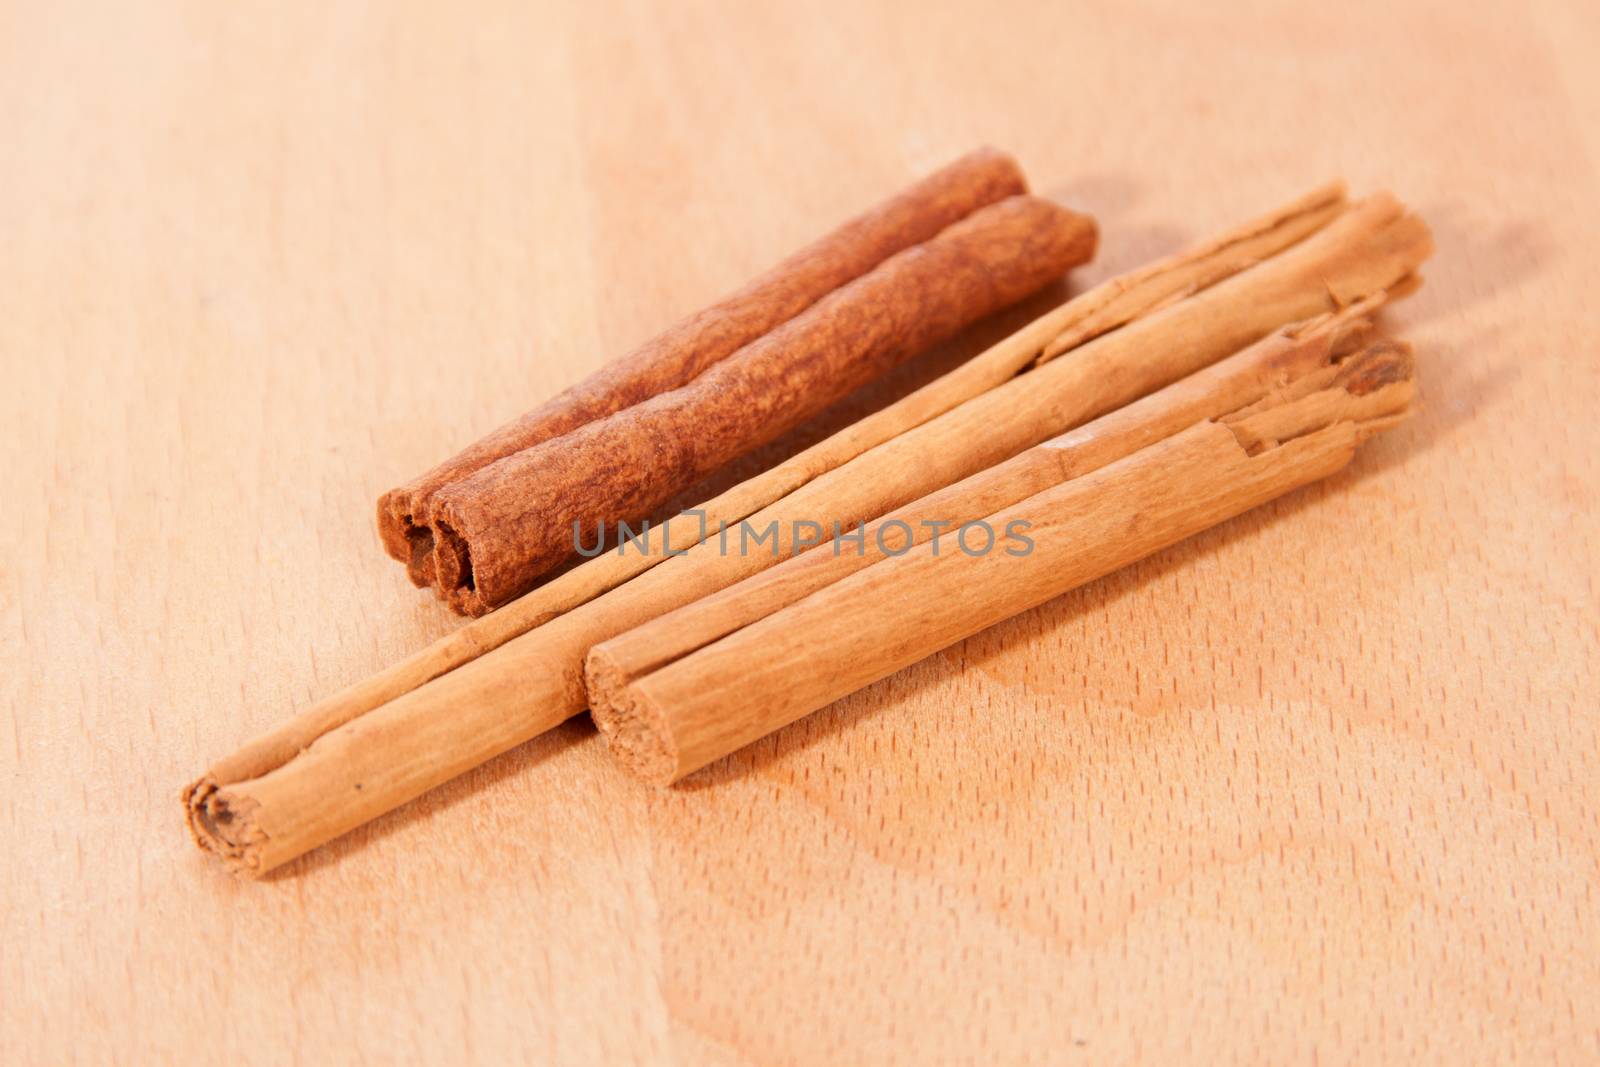 Cinnamon bark by aguirre_mar